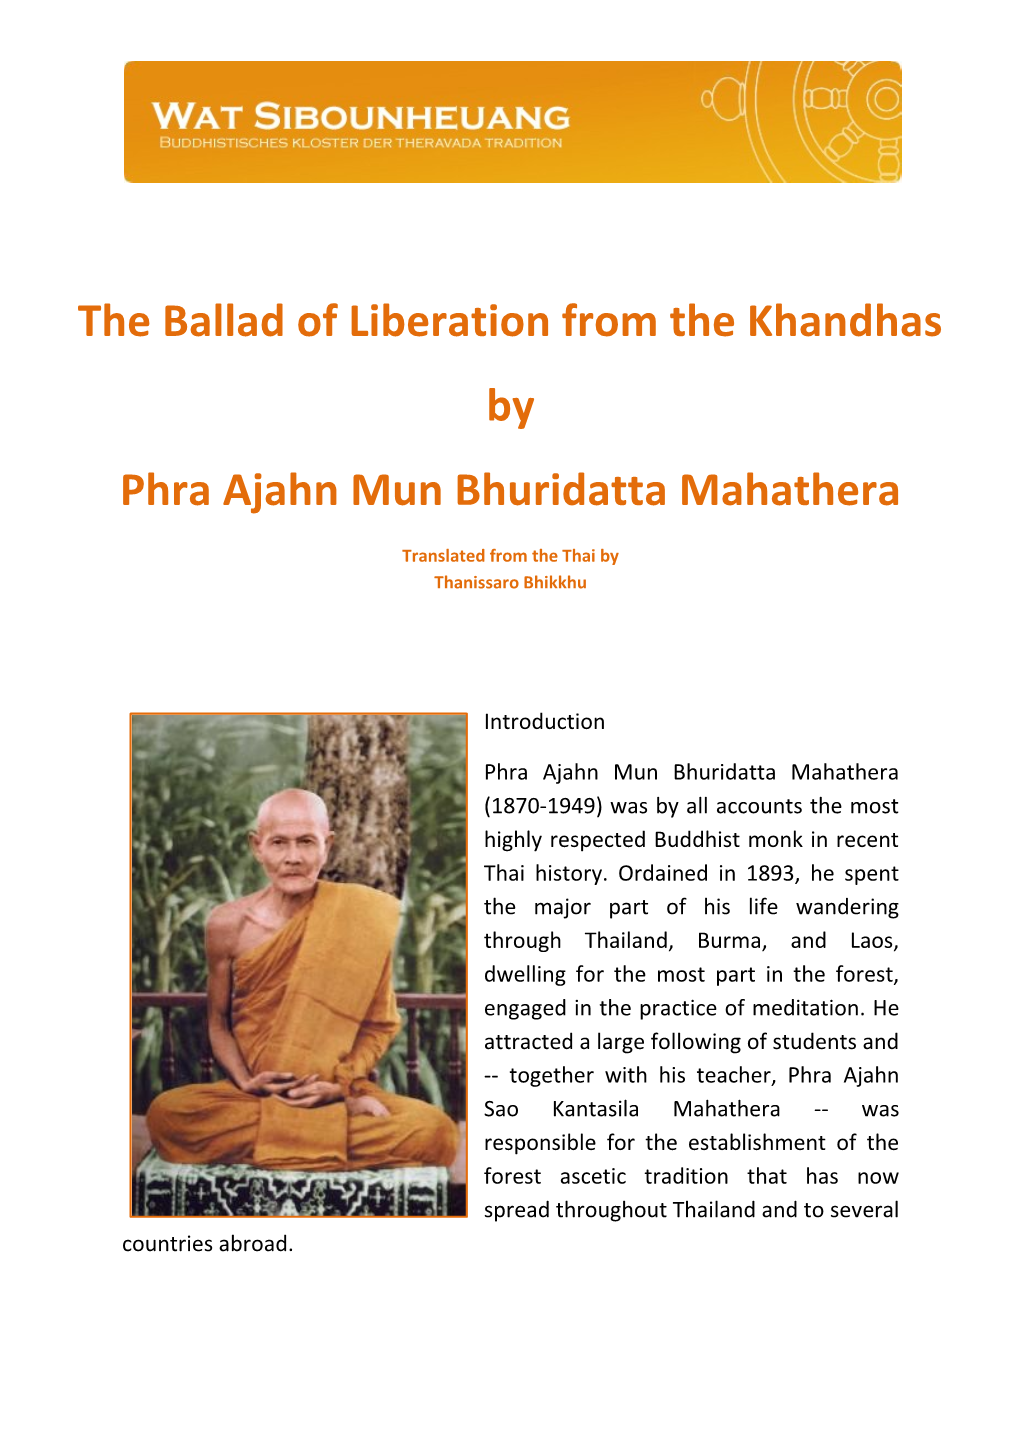 The Ballad of Liberation from the Khandhas by Phra Ajahn Mun Bhuridatta Mahathera